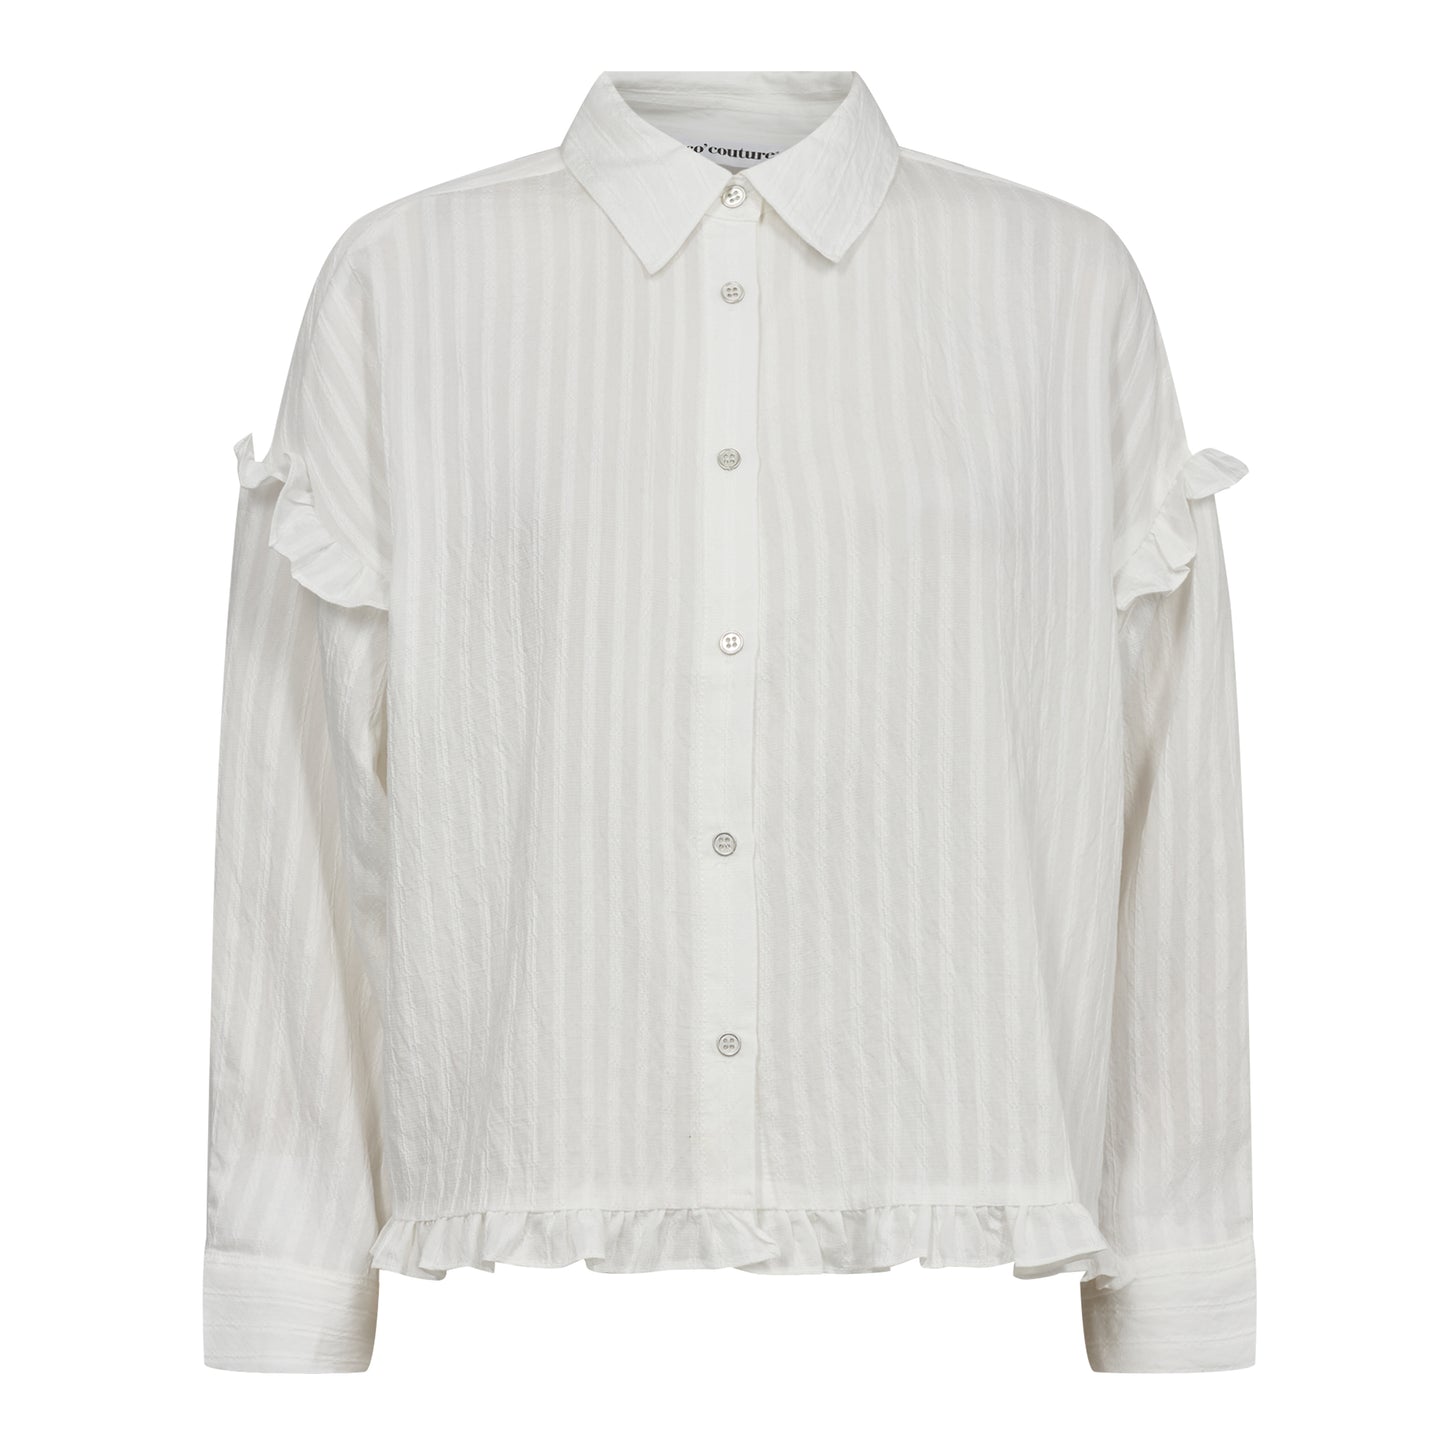 Cocouture - SelmaCC Frill Shirt - White